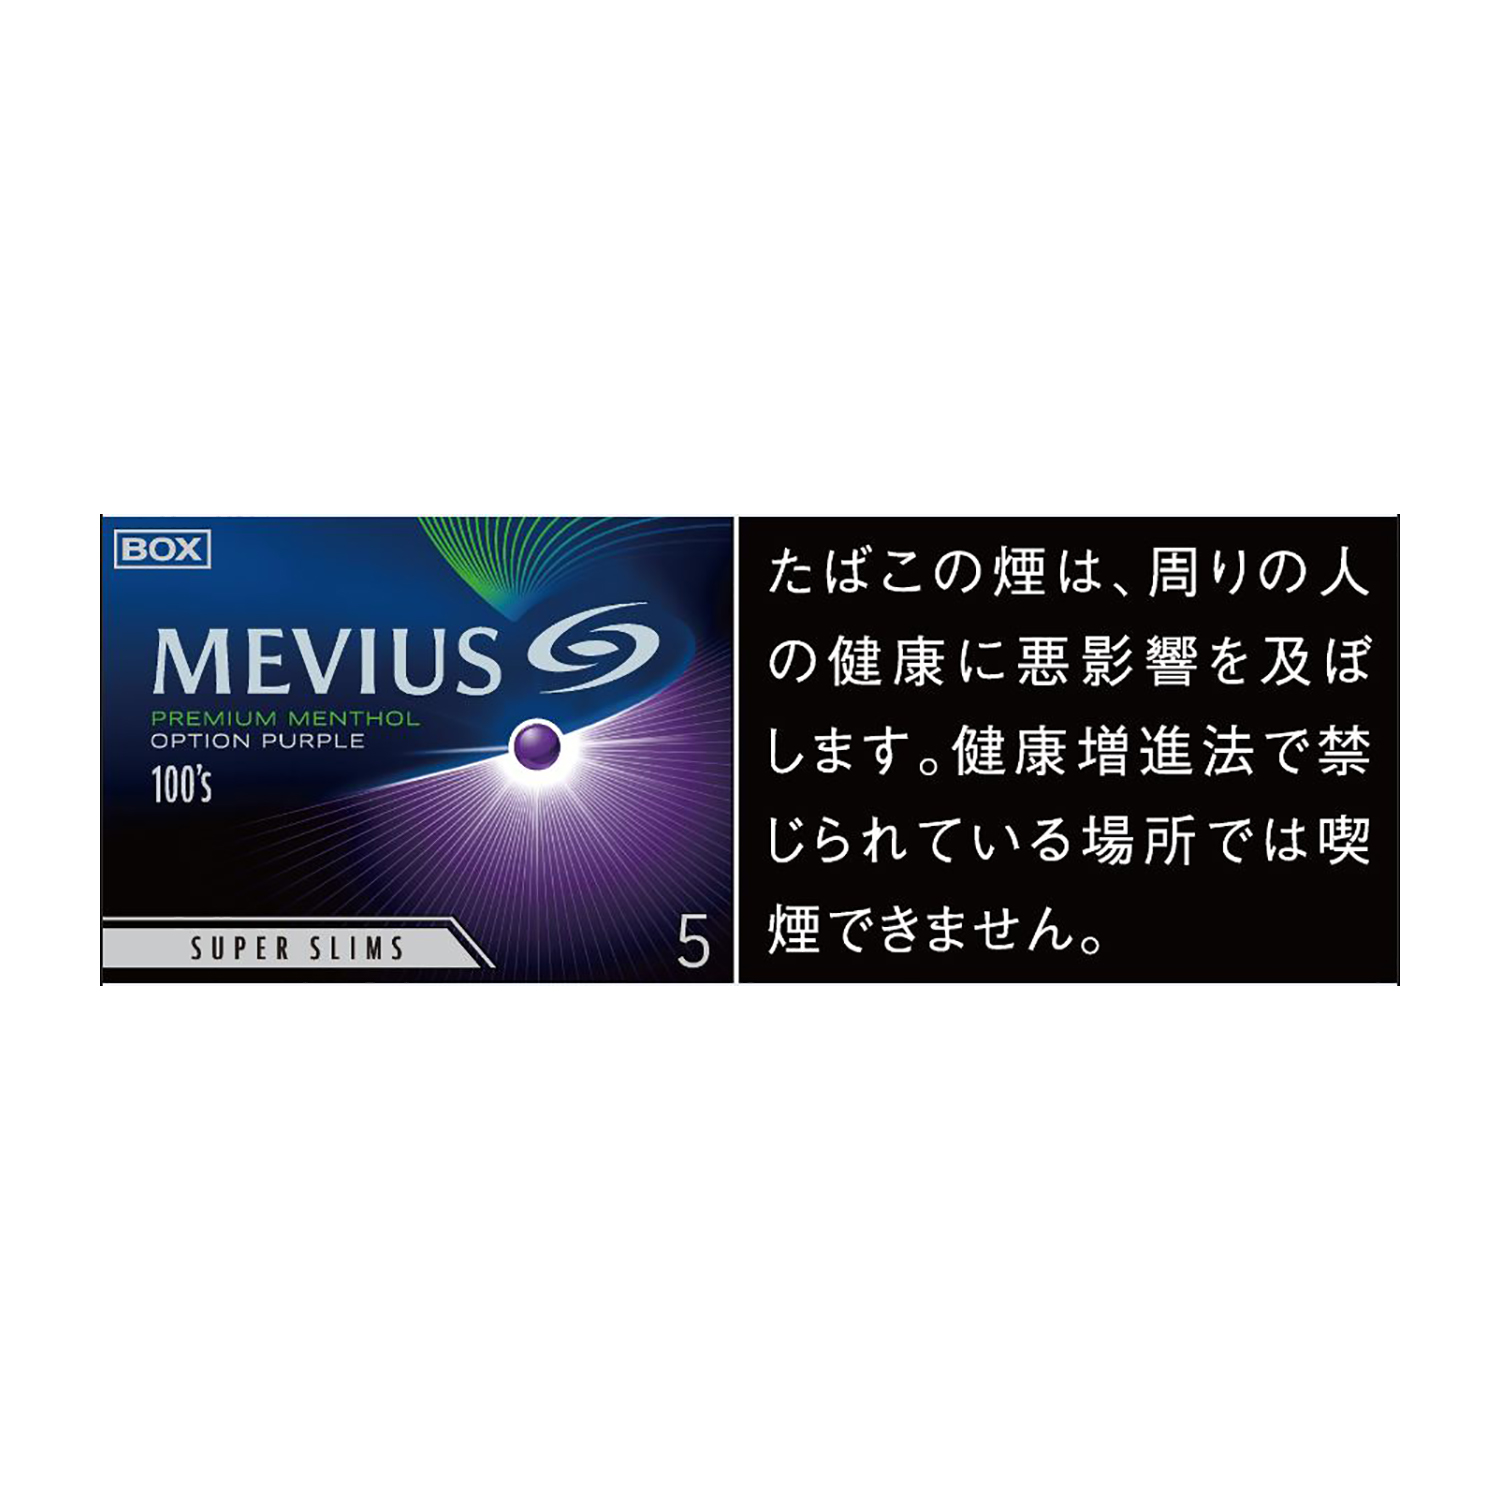 MEVIUS PREMIUM MENTHOL OPTION PURPLE 5 100's SLIM/ Tar:5mg Nicotine:0.5mg